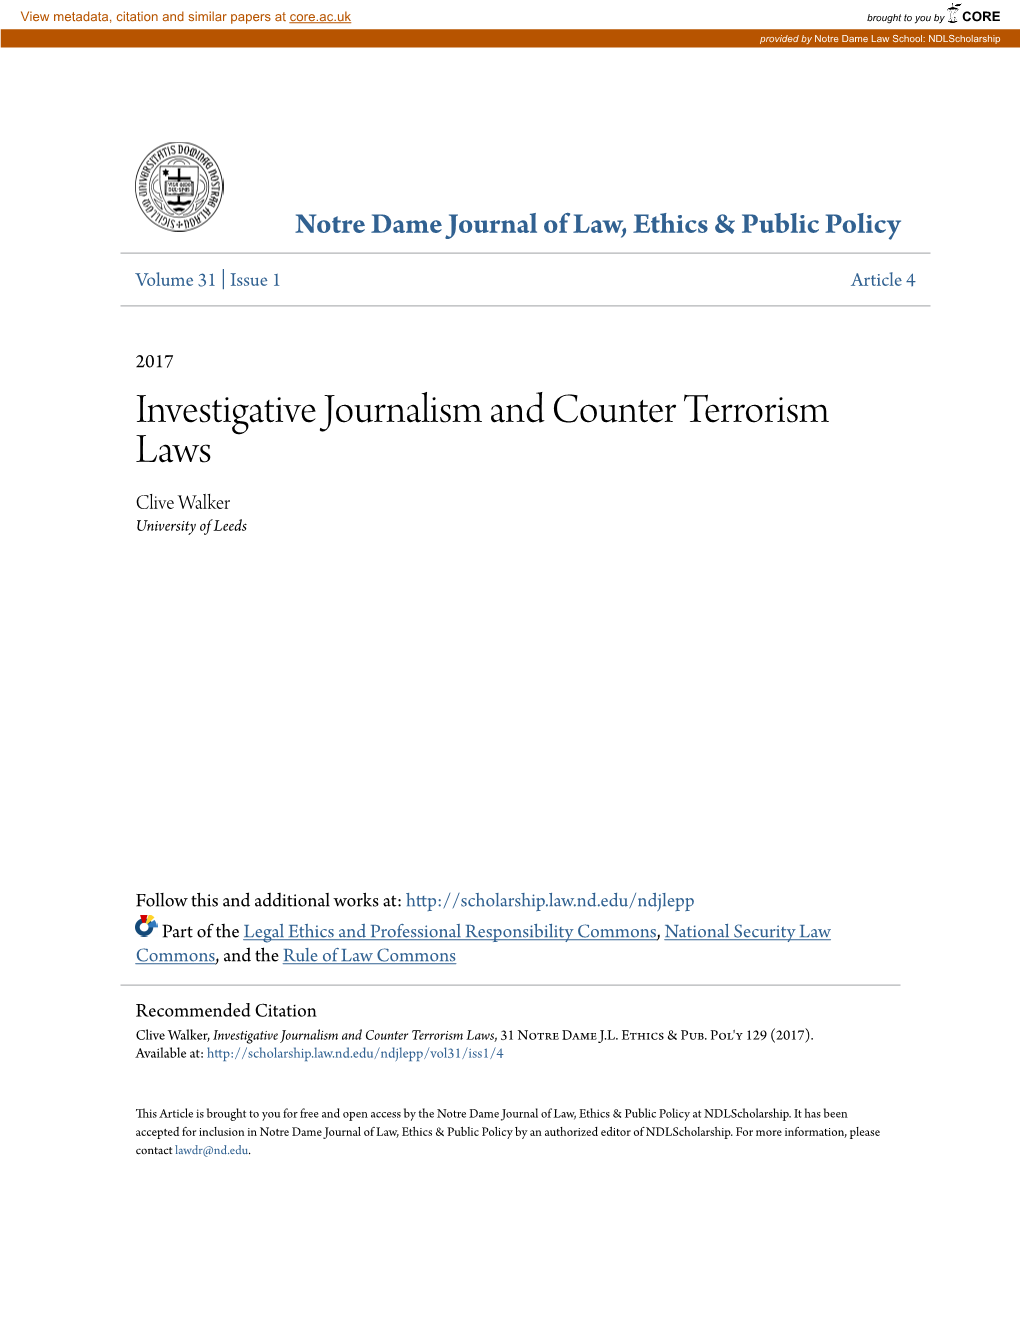 Investigative Journalism and Counter Terrorism Laws Clive Walker University of Leeds